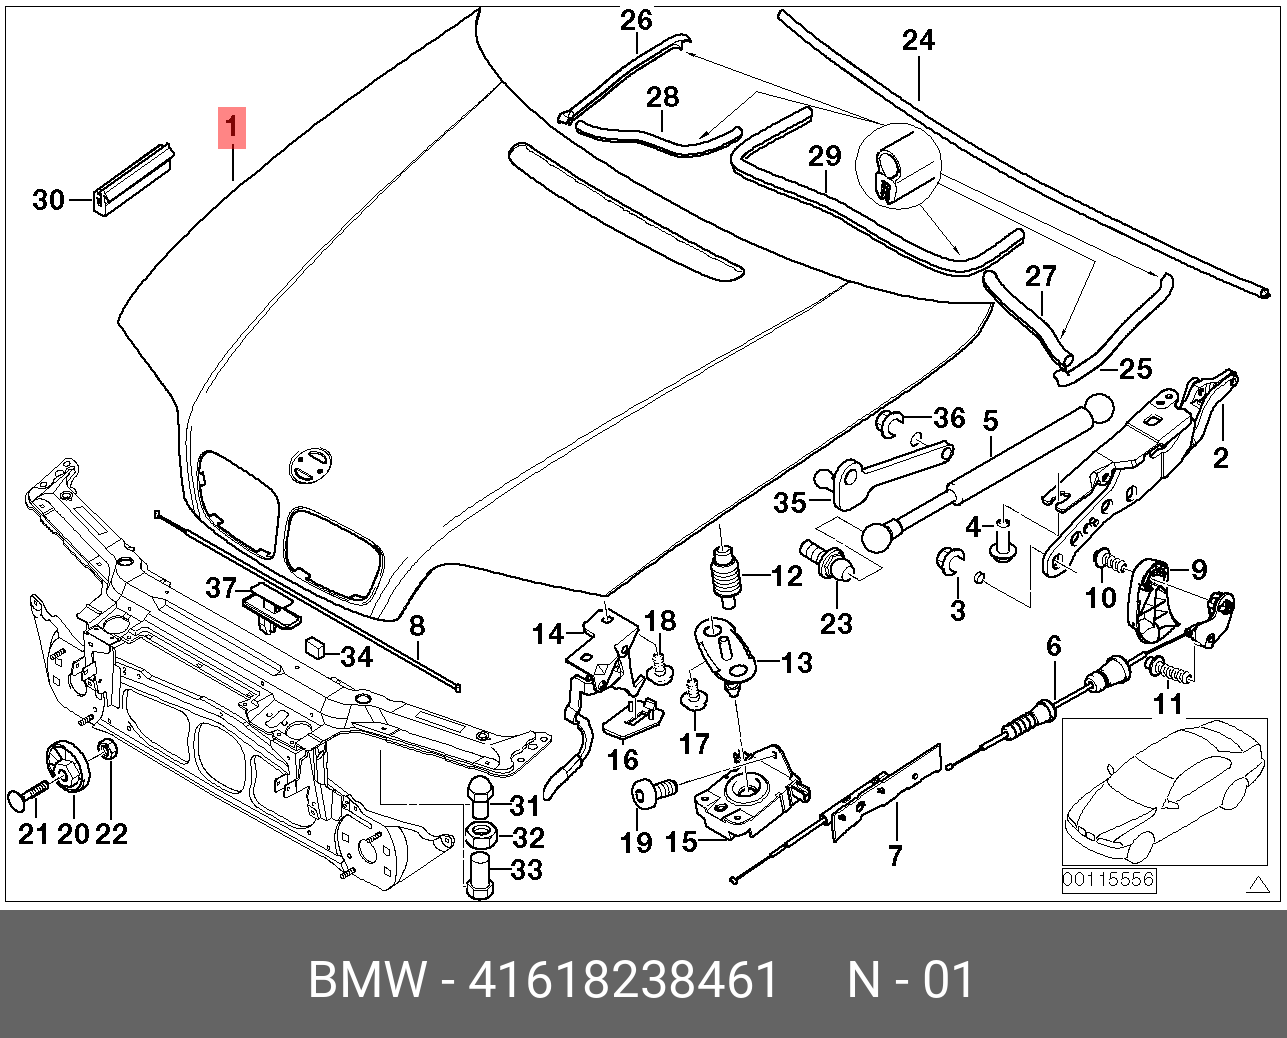 Название деталей капота. BMW x6 капот тросик схема. Габариты капота БМВ е53. BMW x6 e71 капот тросик схема. Уплотнитель капота БМВ е46.